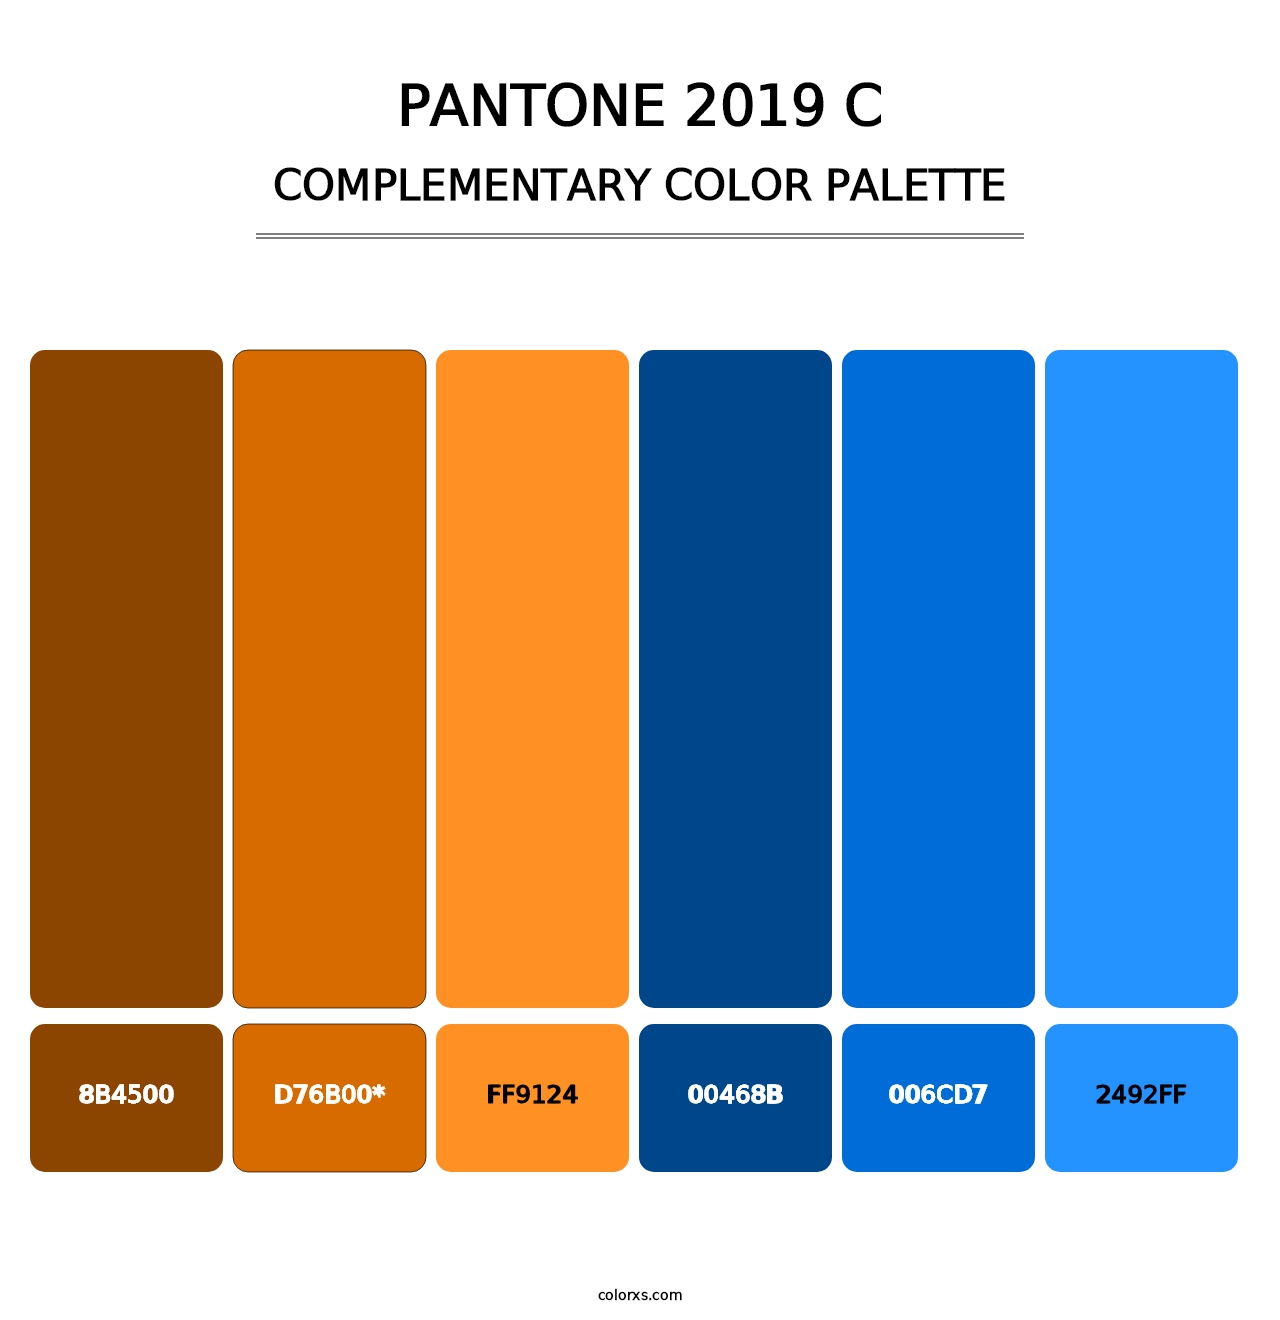 PANTONE 2019 C - Complementary Color Palette